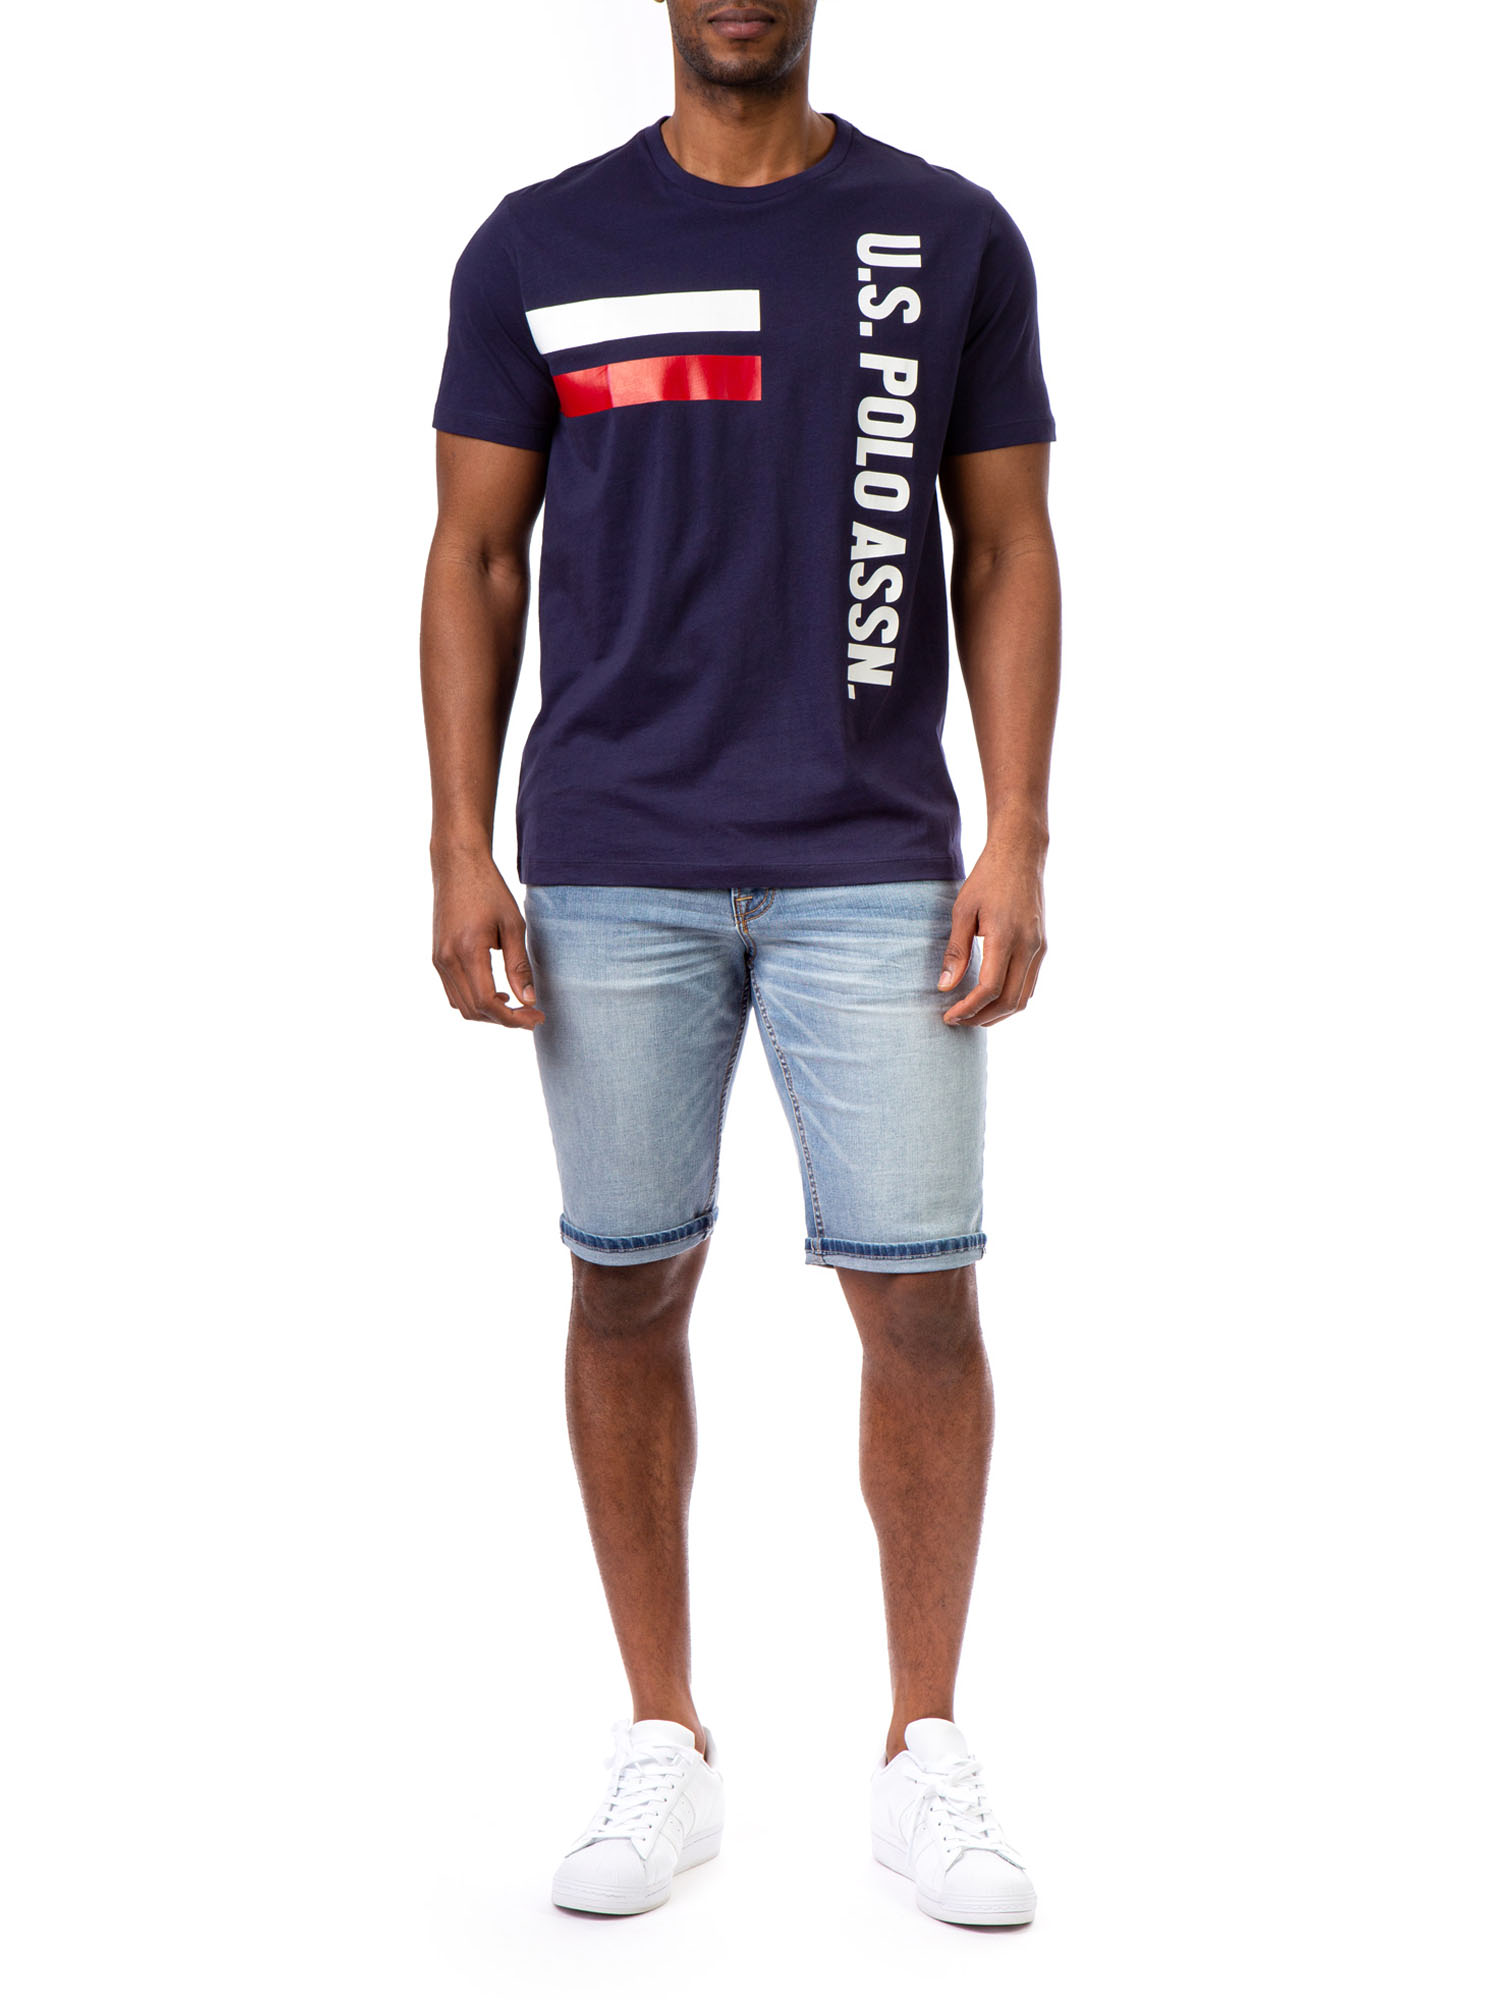 U.S. Polo Assn. Men's Short Sleeve Printed T-Shirt - image 2 of 5